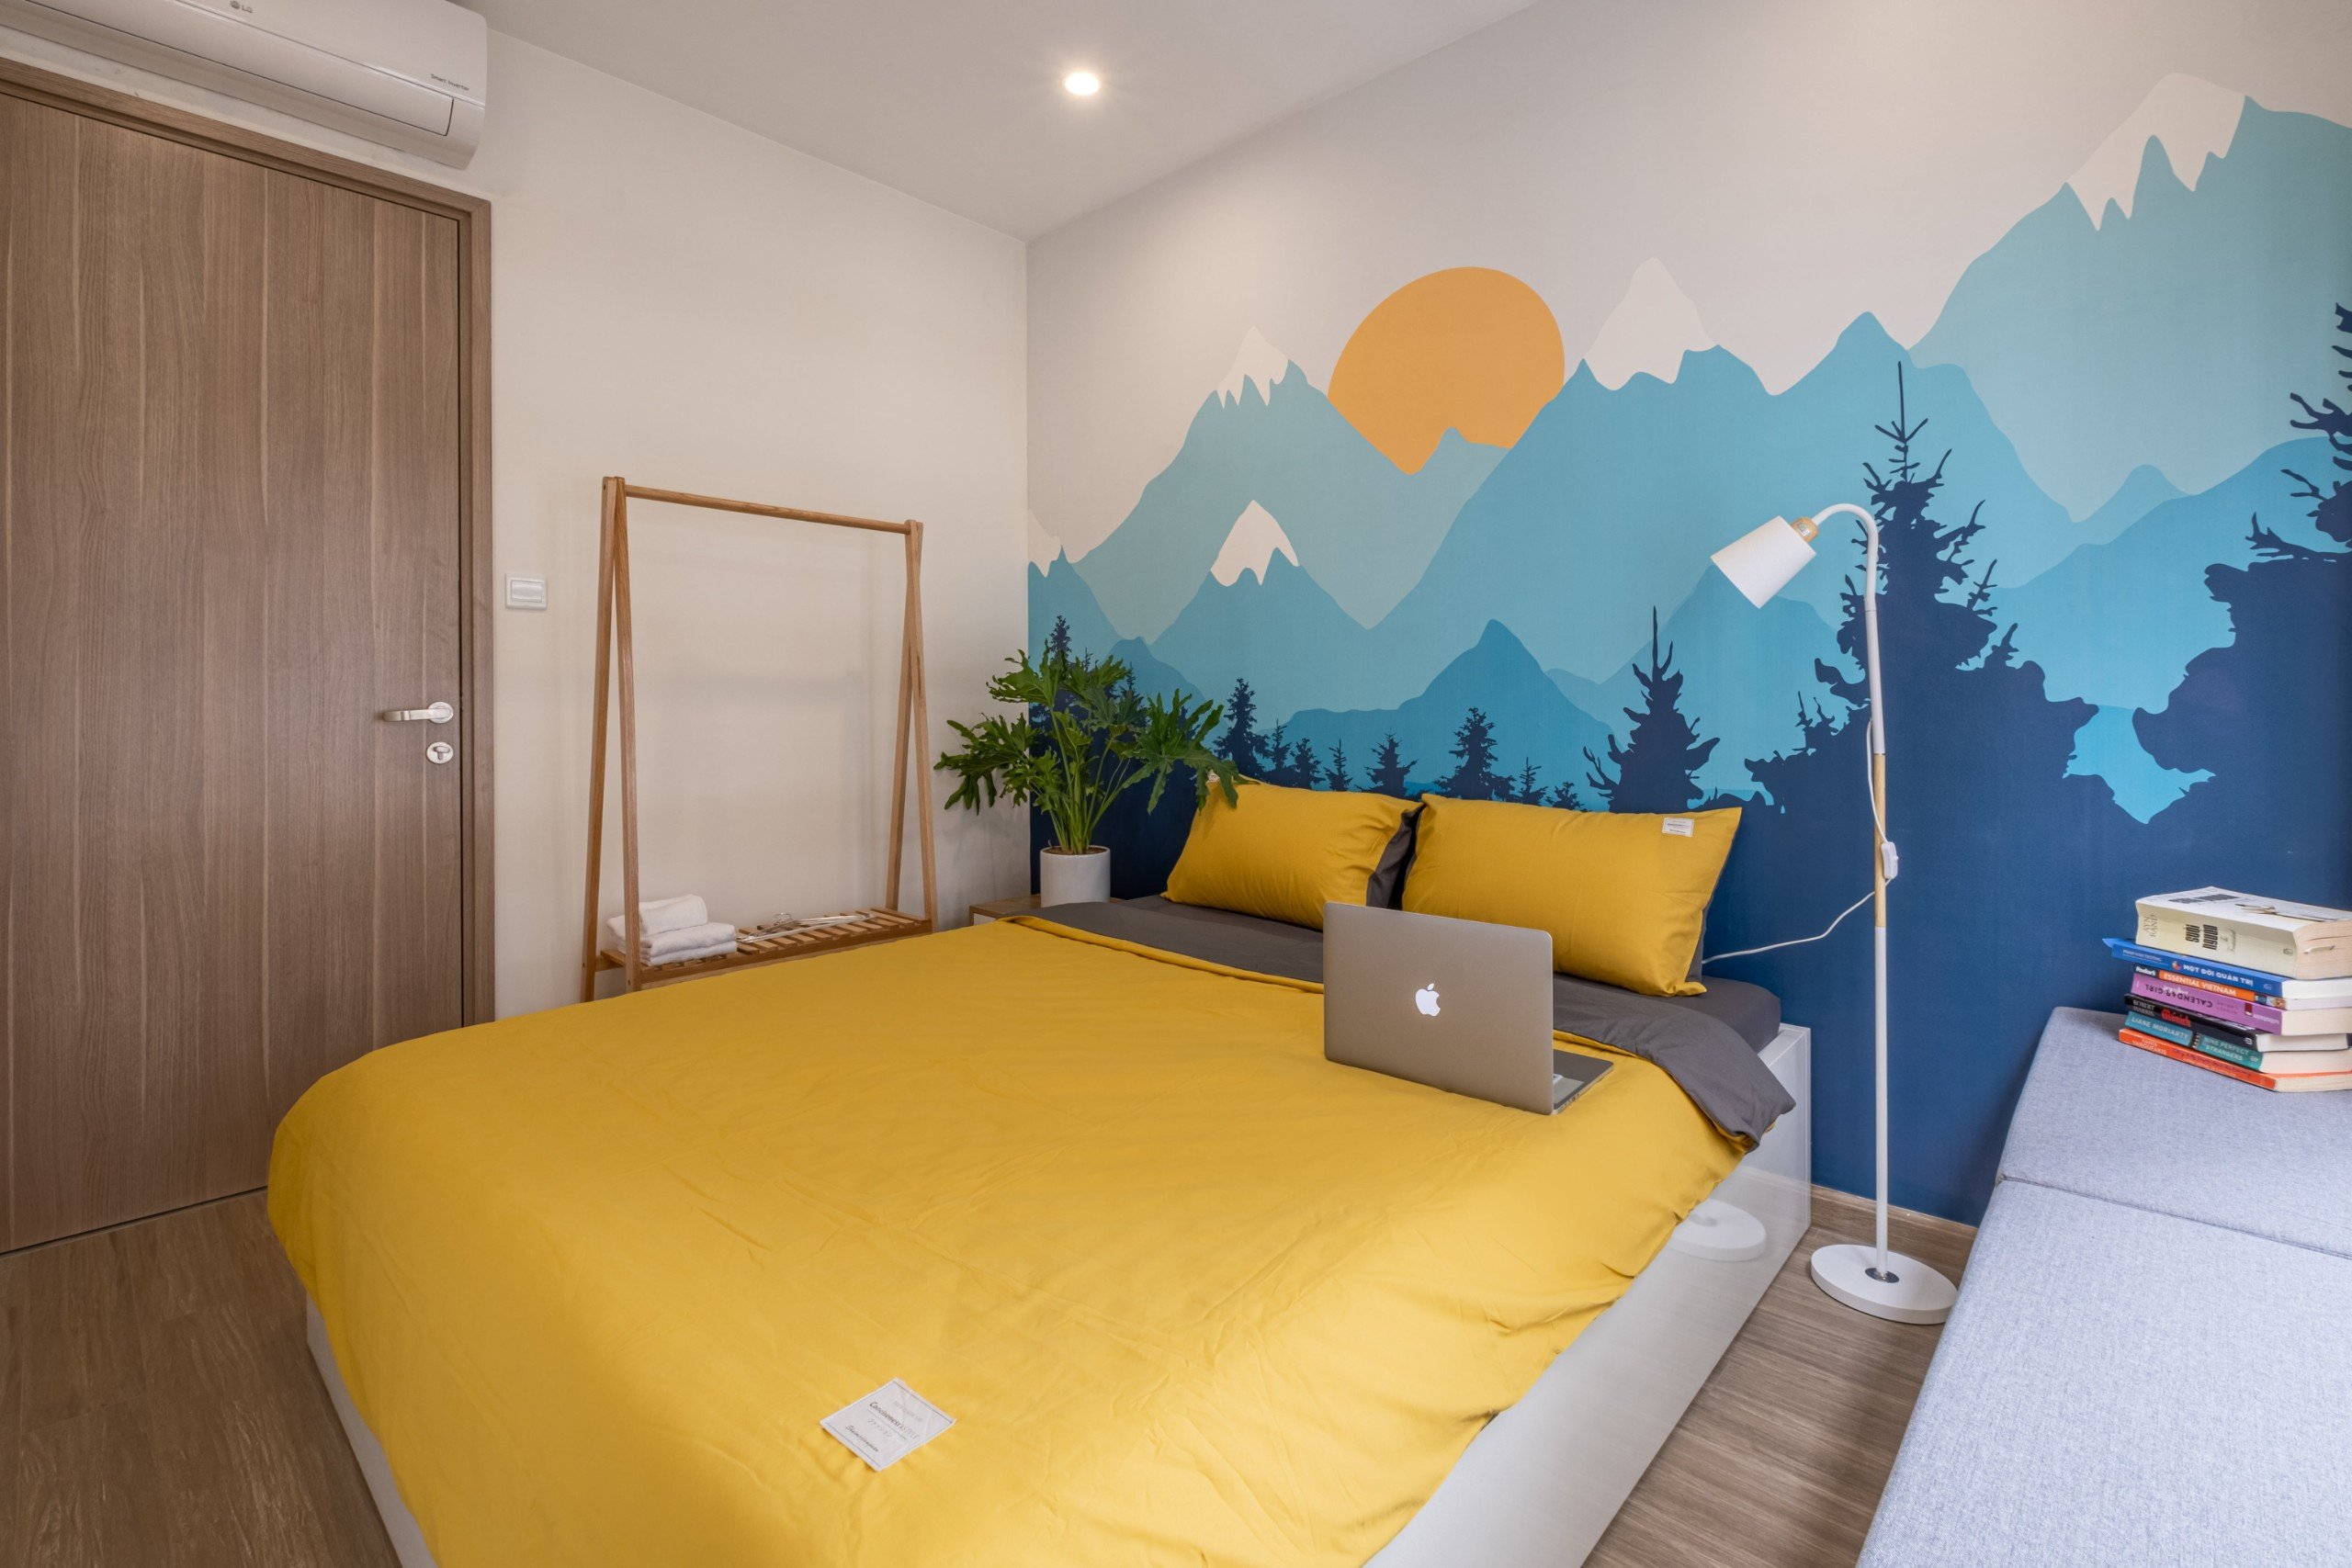 3 bedroom apartment for rent in Vinhomes Ocean Park - good price 7